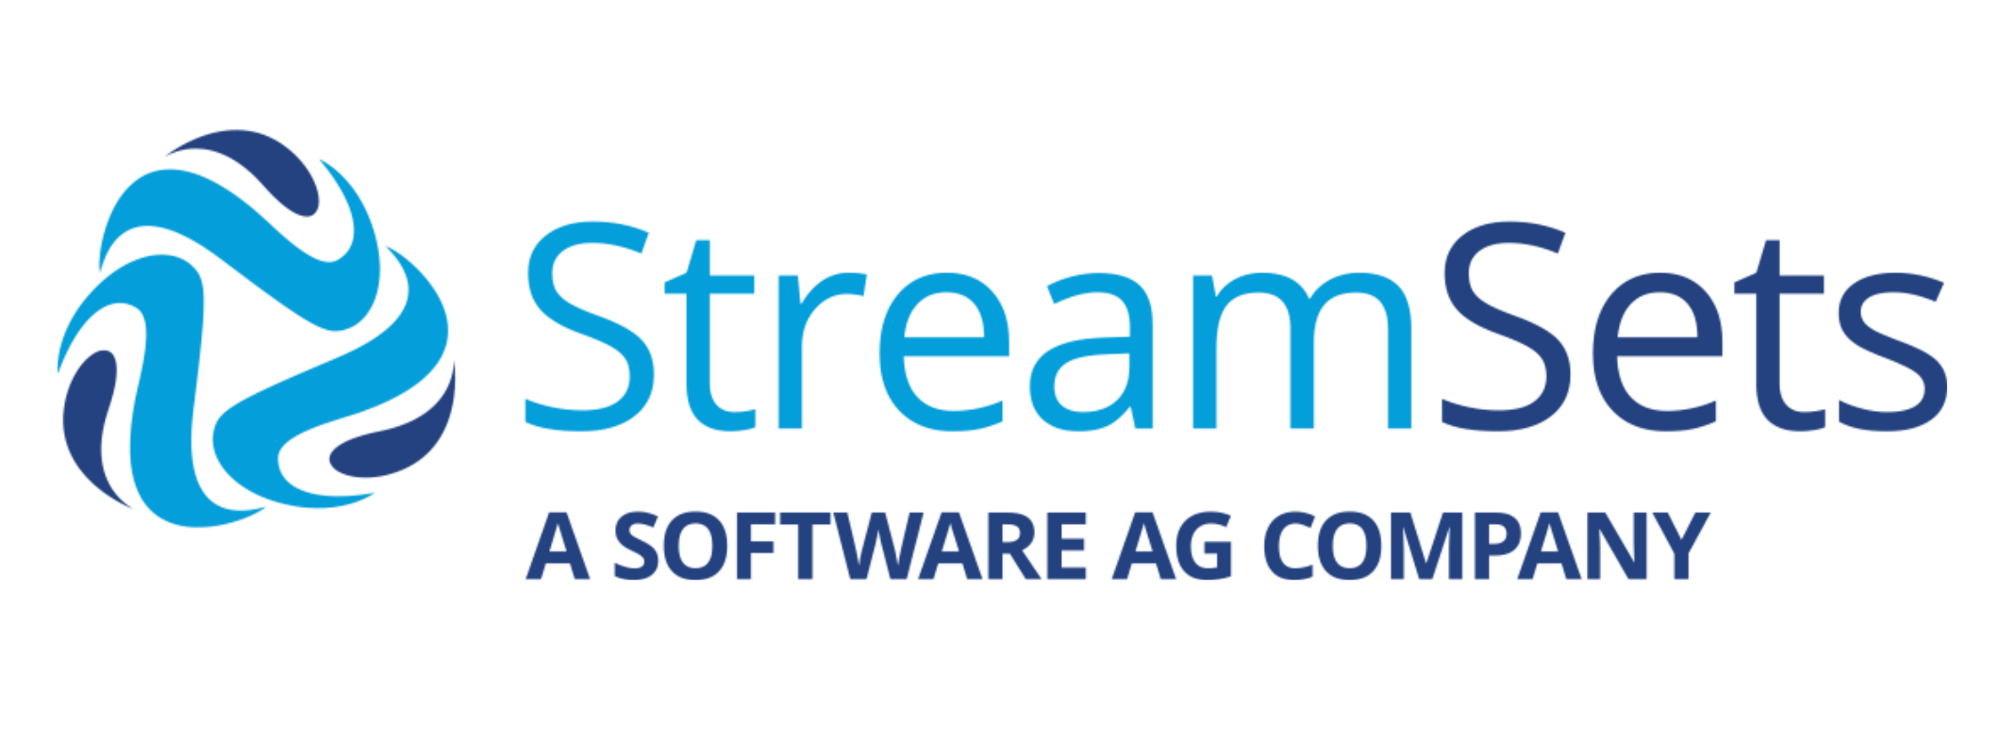 StreamSets Software AG (1)